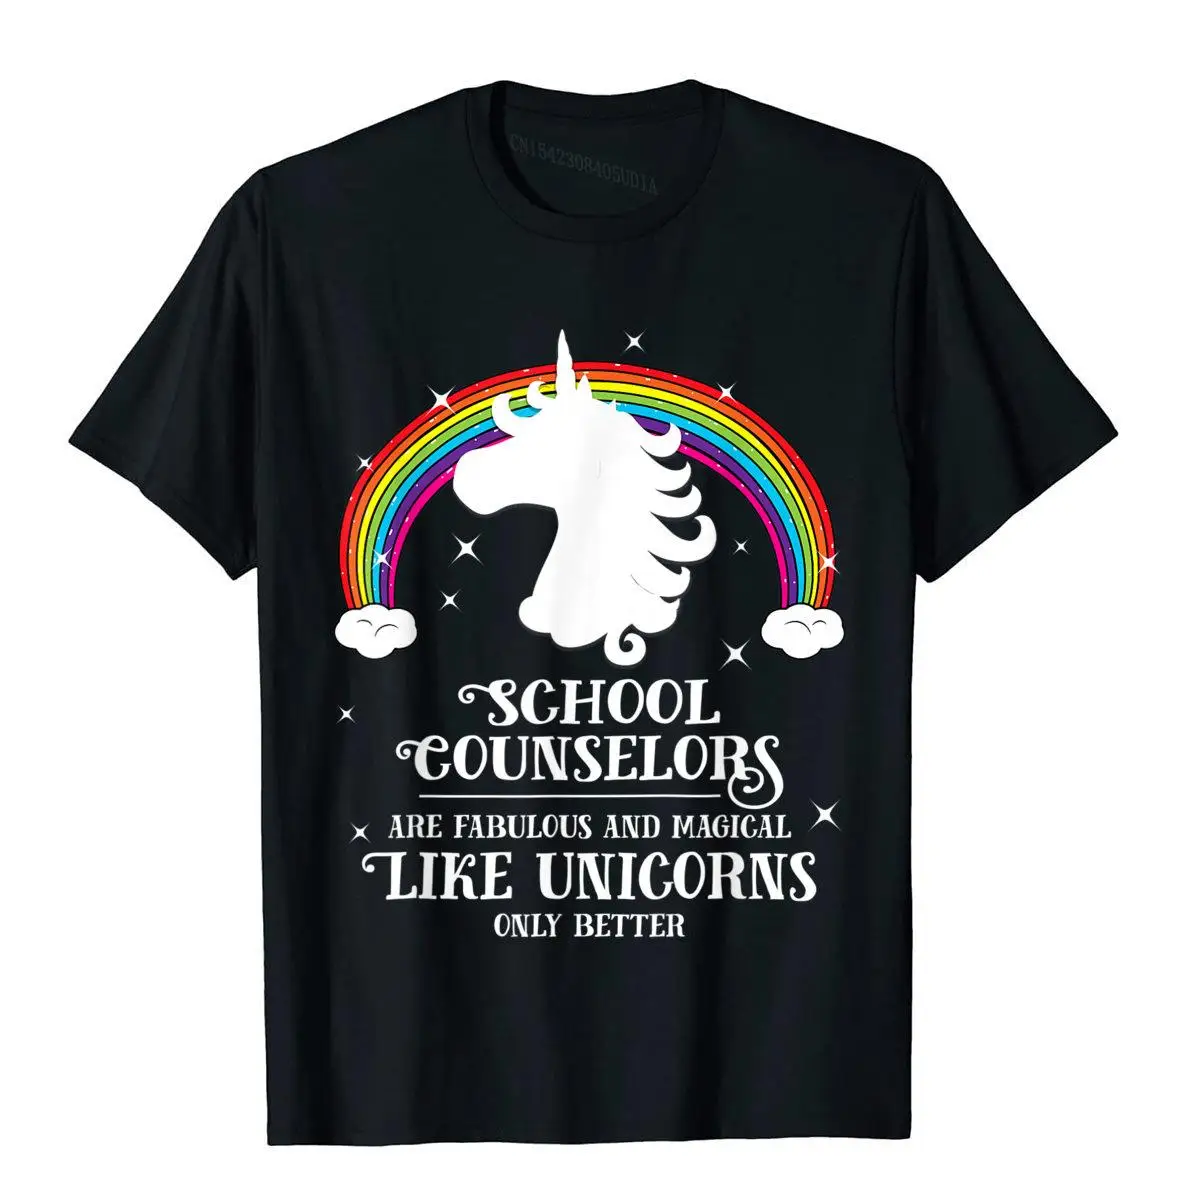 

School Counselors Magical Like Unicorns Funny Tshirt Gift Cotton Man Tees Printing Top T-Shirts Simple Style Fashion